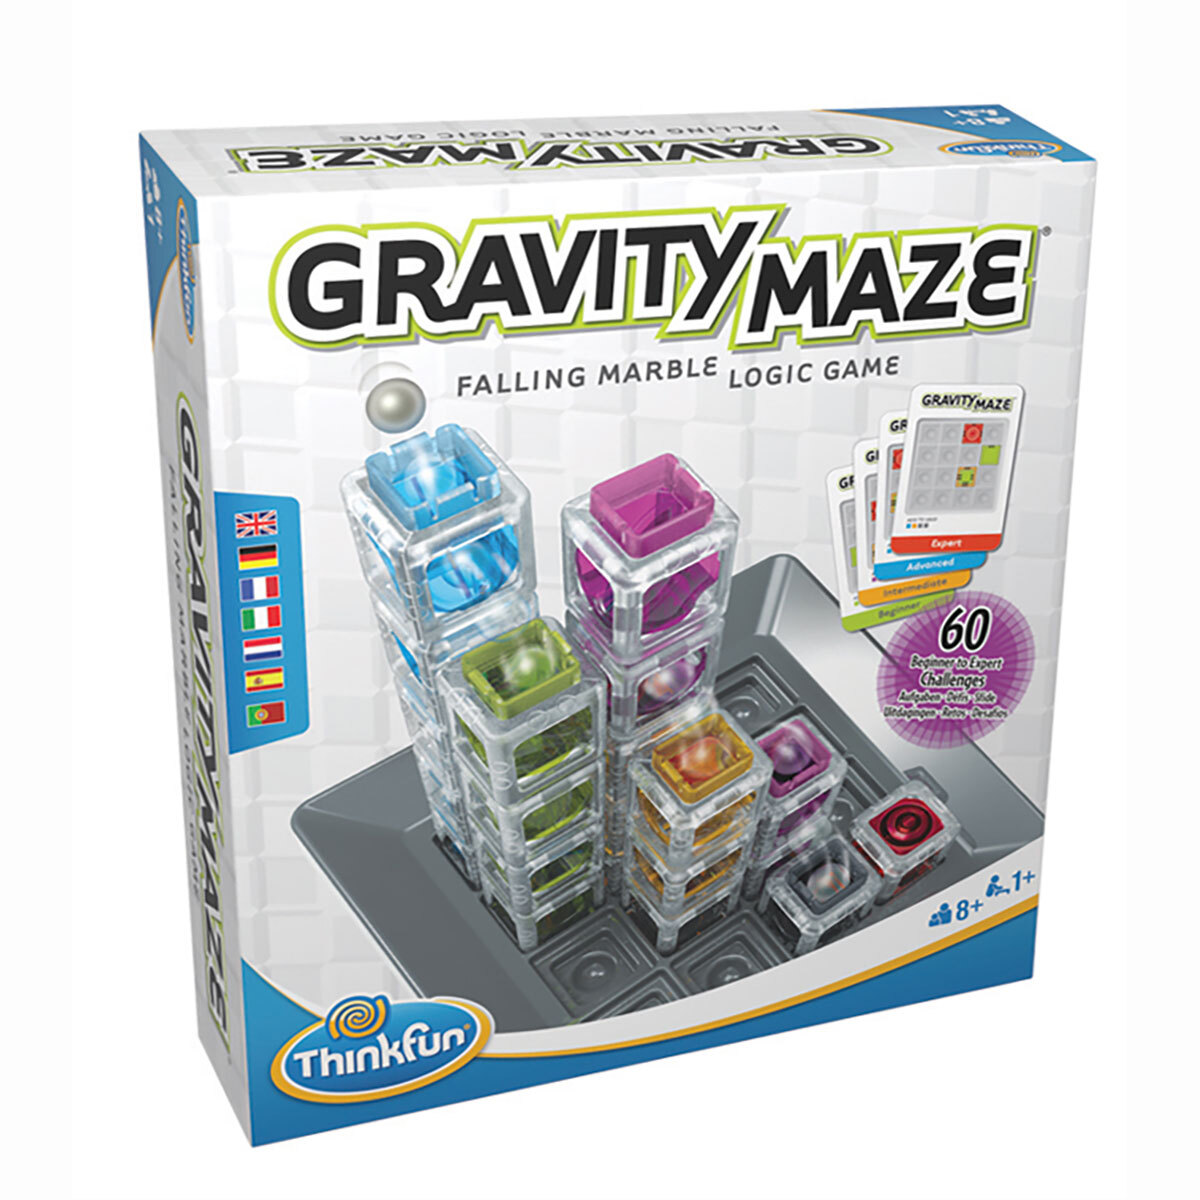 ThinkFun 44001006 Gravity Maze Logic Falling Marble Game for sale online 